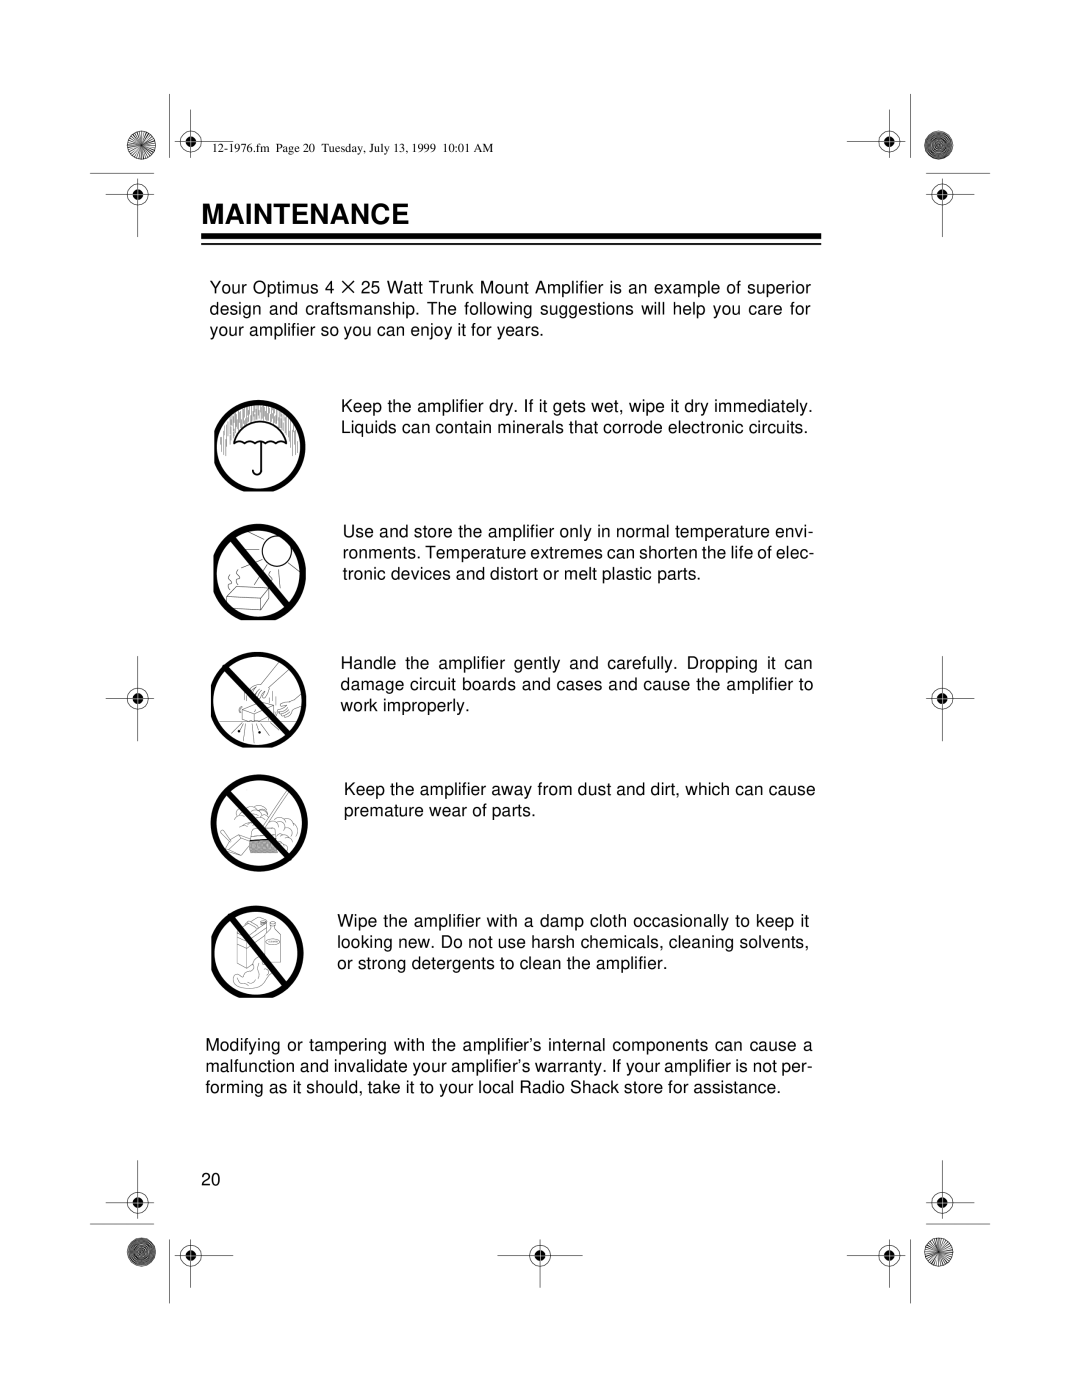 Radio Shack Trunk Mount owner manual Maintenance 